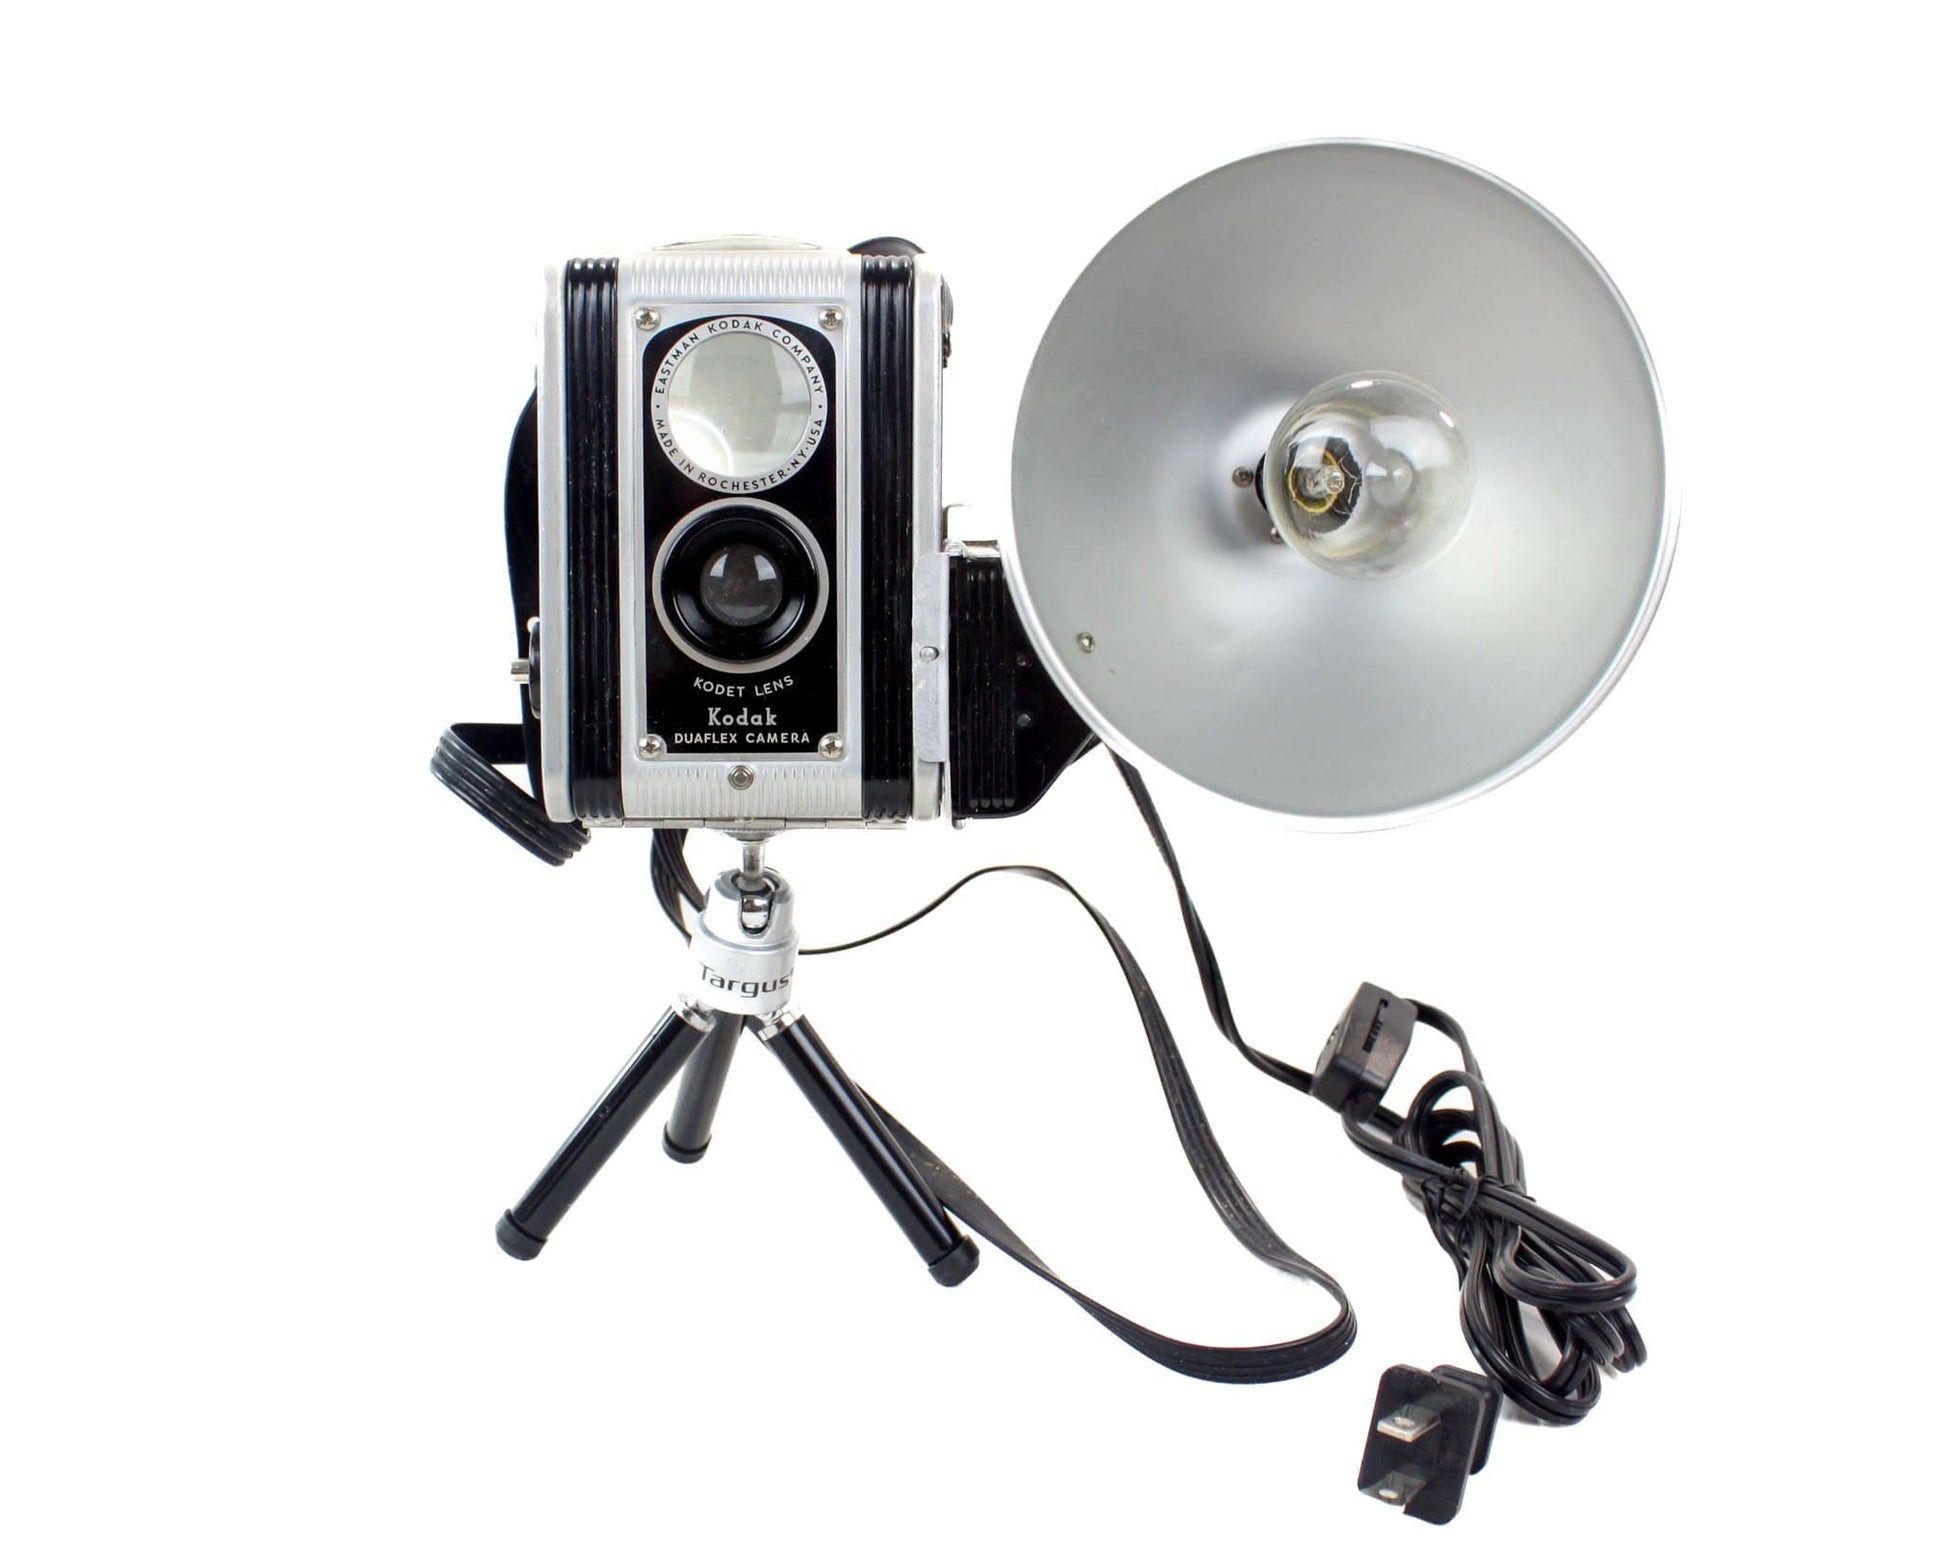 LightAndTimeArt Camera Lamp LED Desk Lamp - Black Kodak Duaflex Vintage Camera on mini tripod, Photographer and Vintage Lover gift